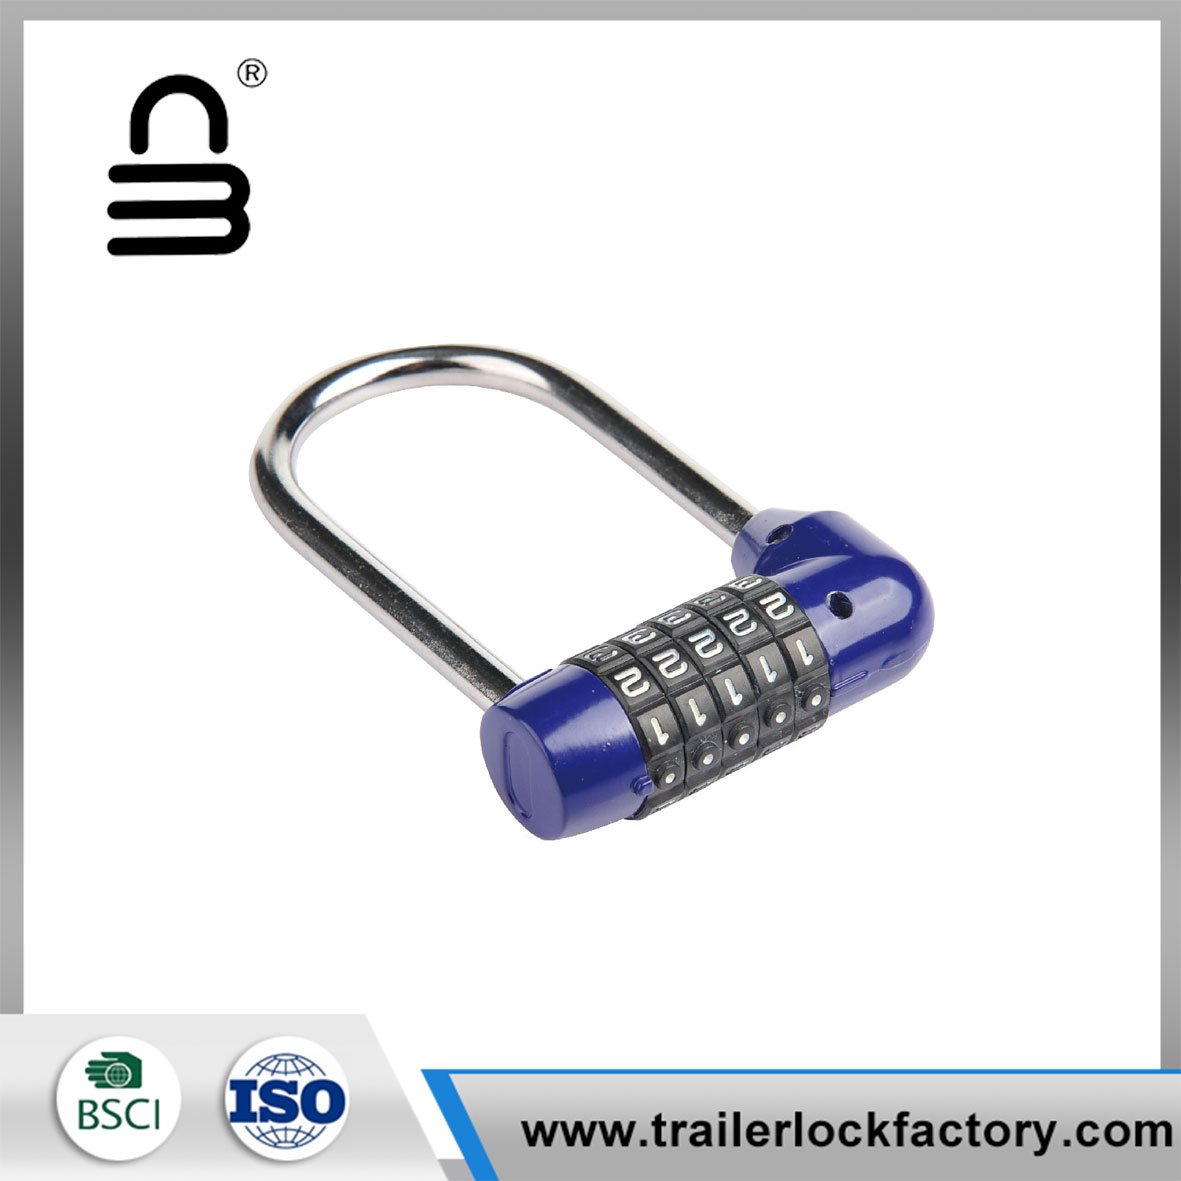 5 Digital Combination Lock Security Padlock - 0